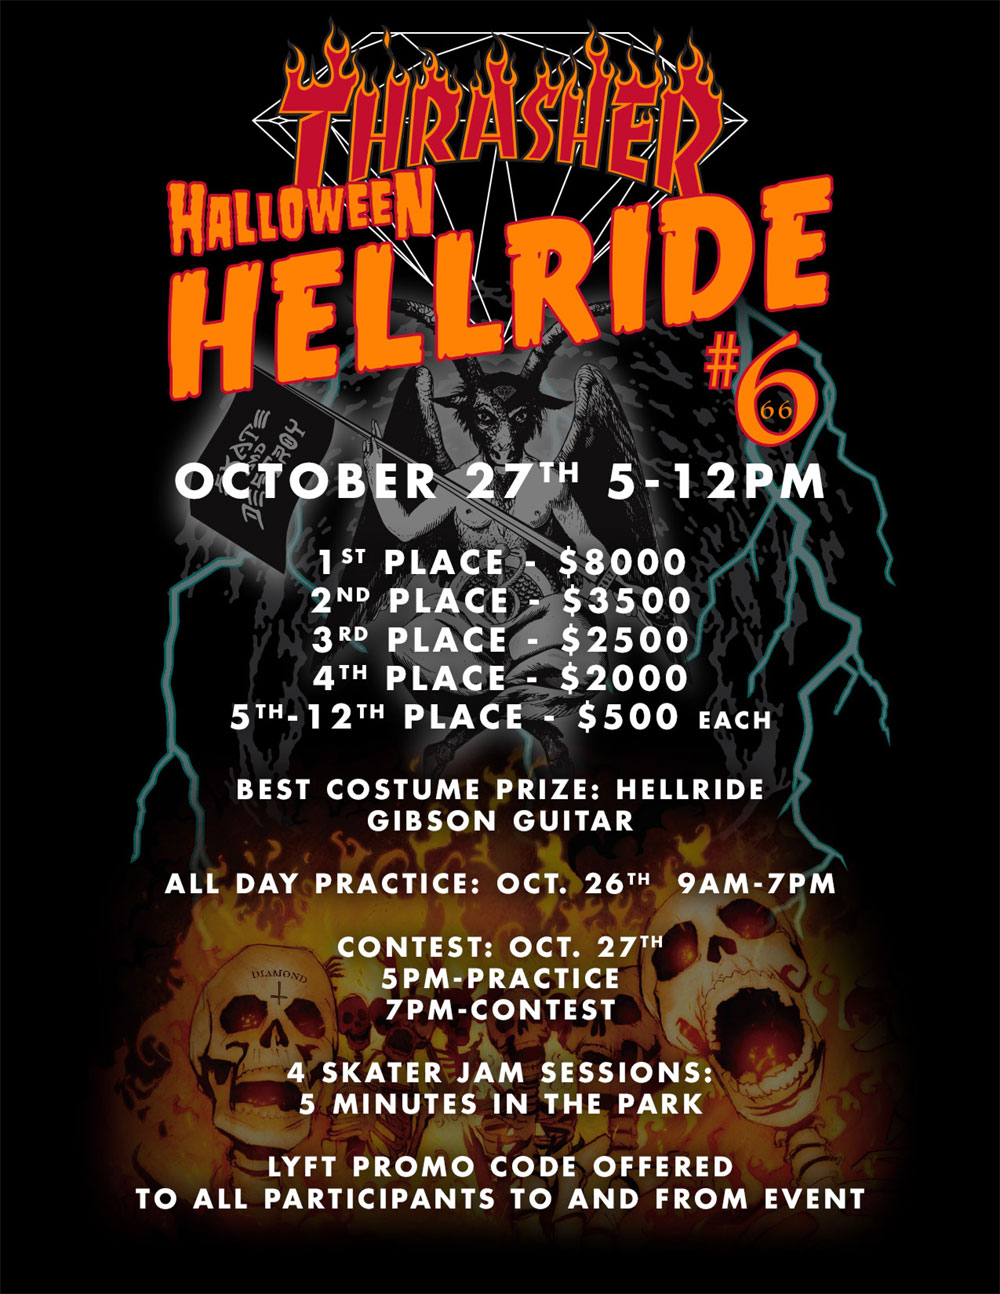 Thrasher Halloween Hellride 6